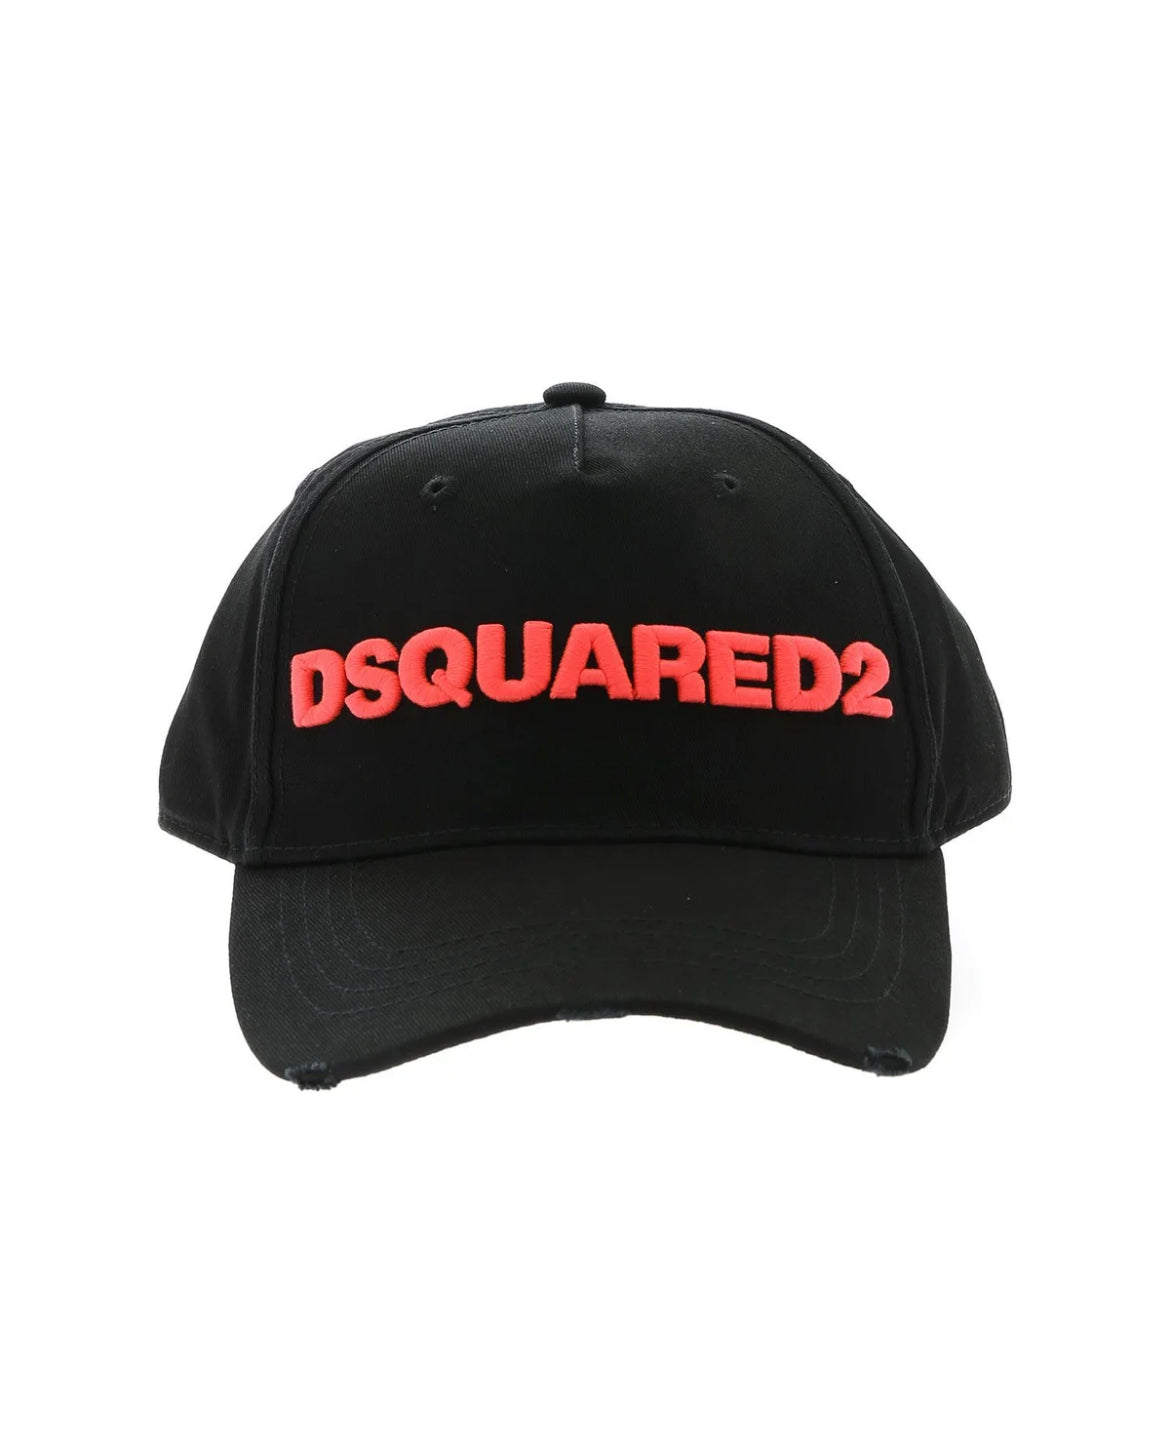 DSQUARED2 LOGO BASEBALL CAP - BLACK / RED